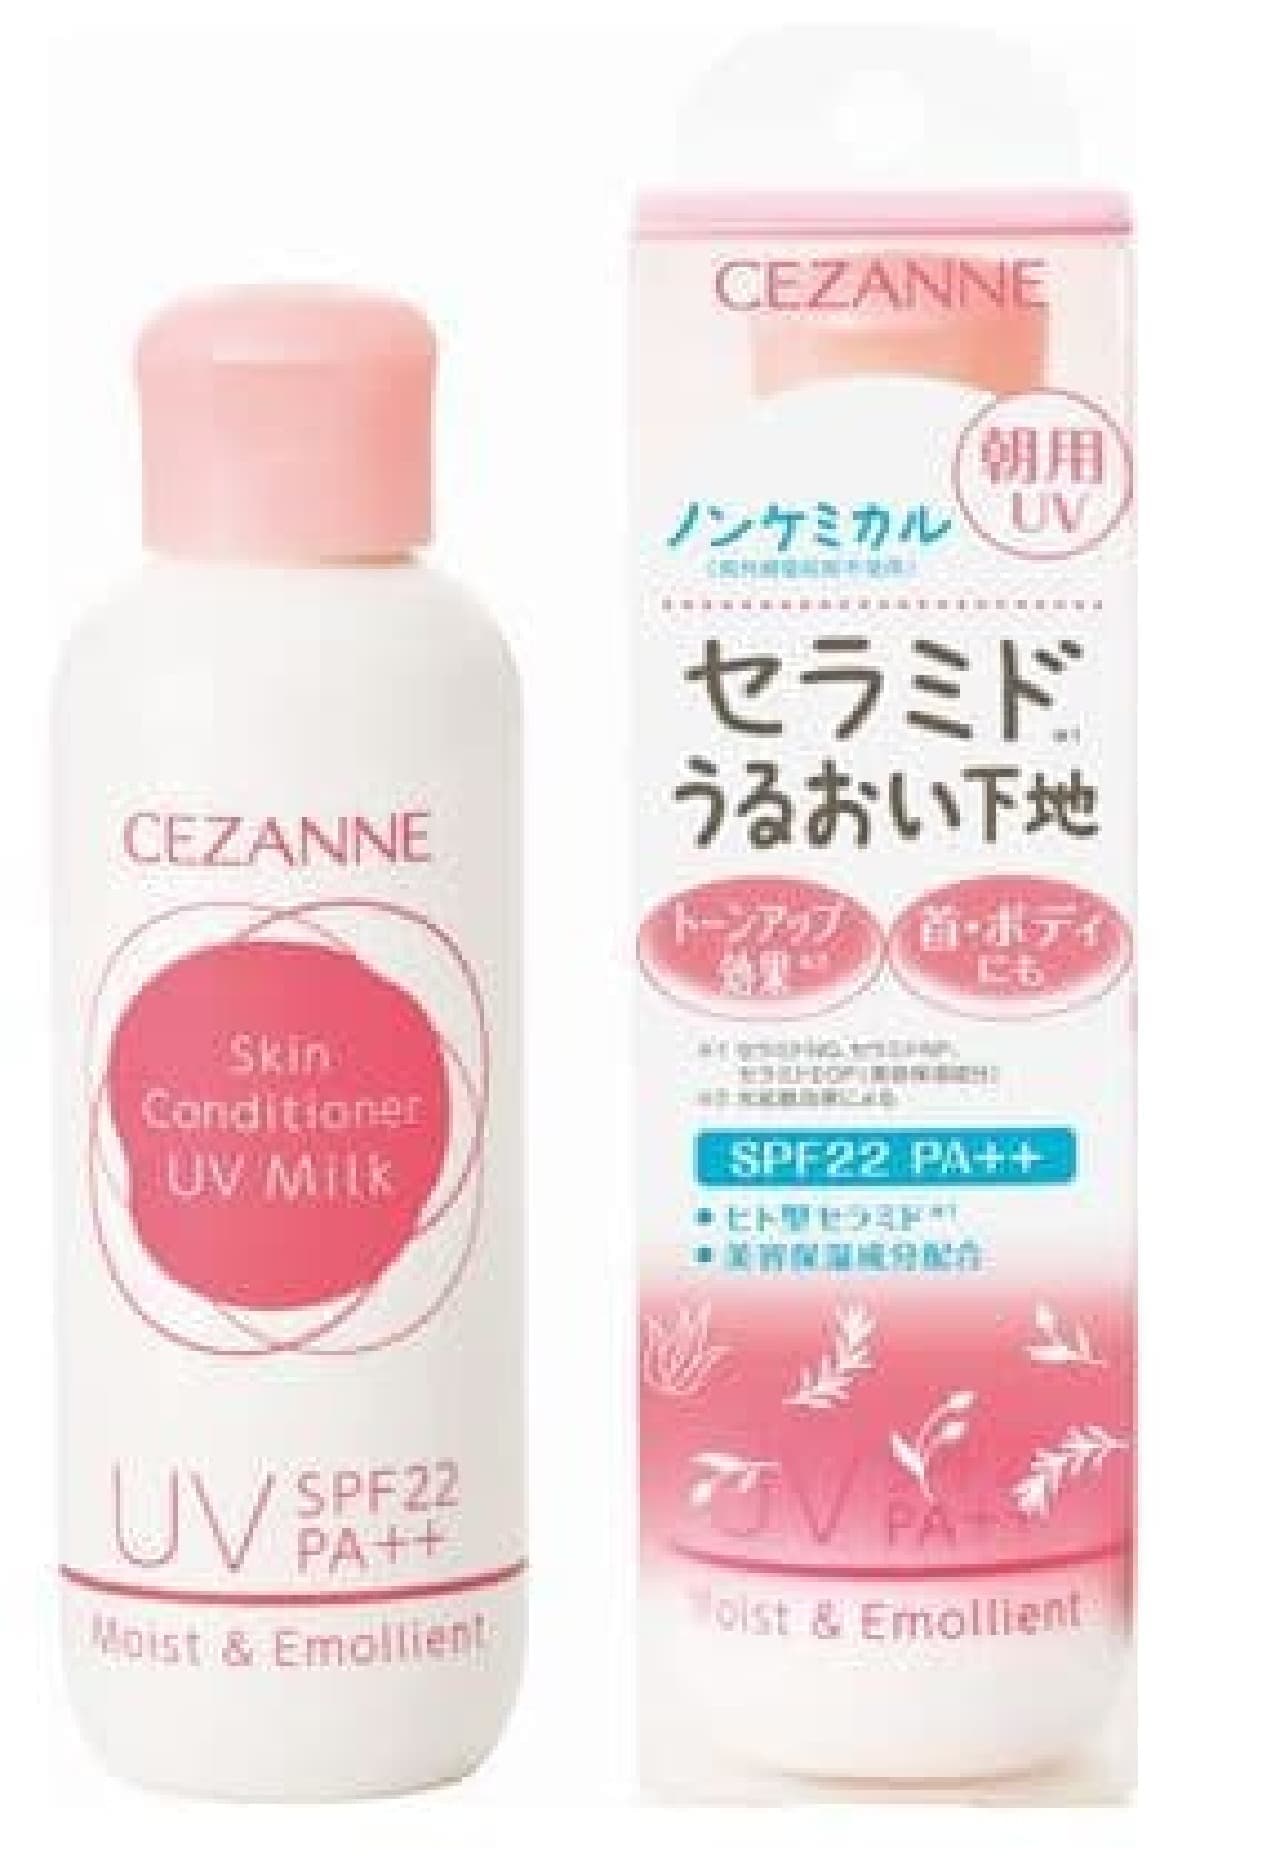 Sezanne Morning Skin Conditioner UV Milk